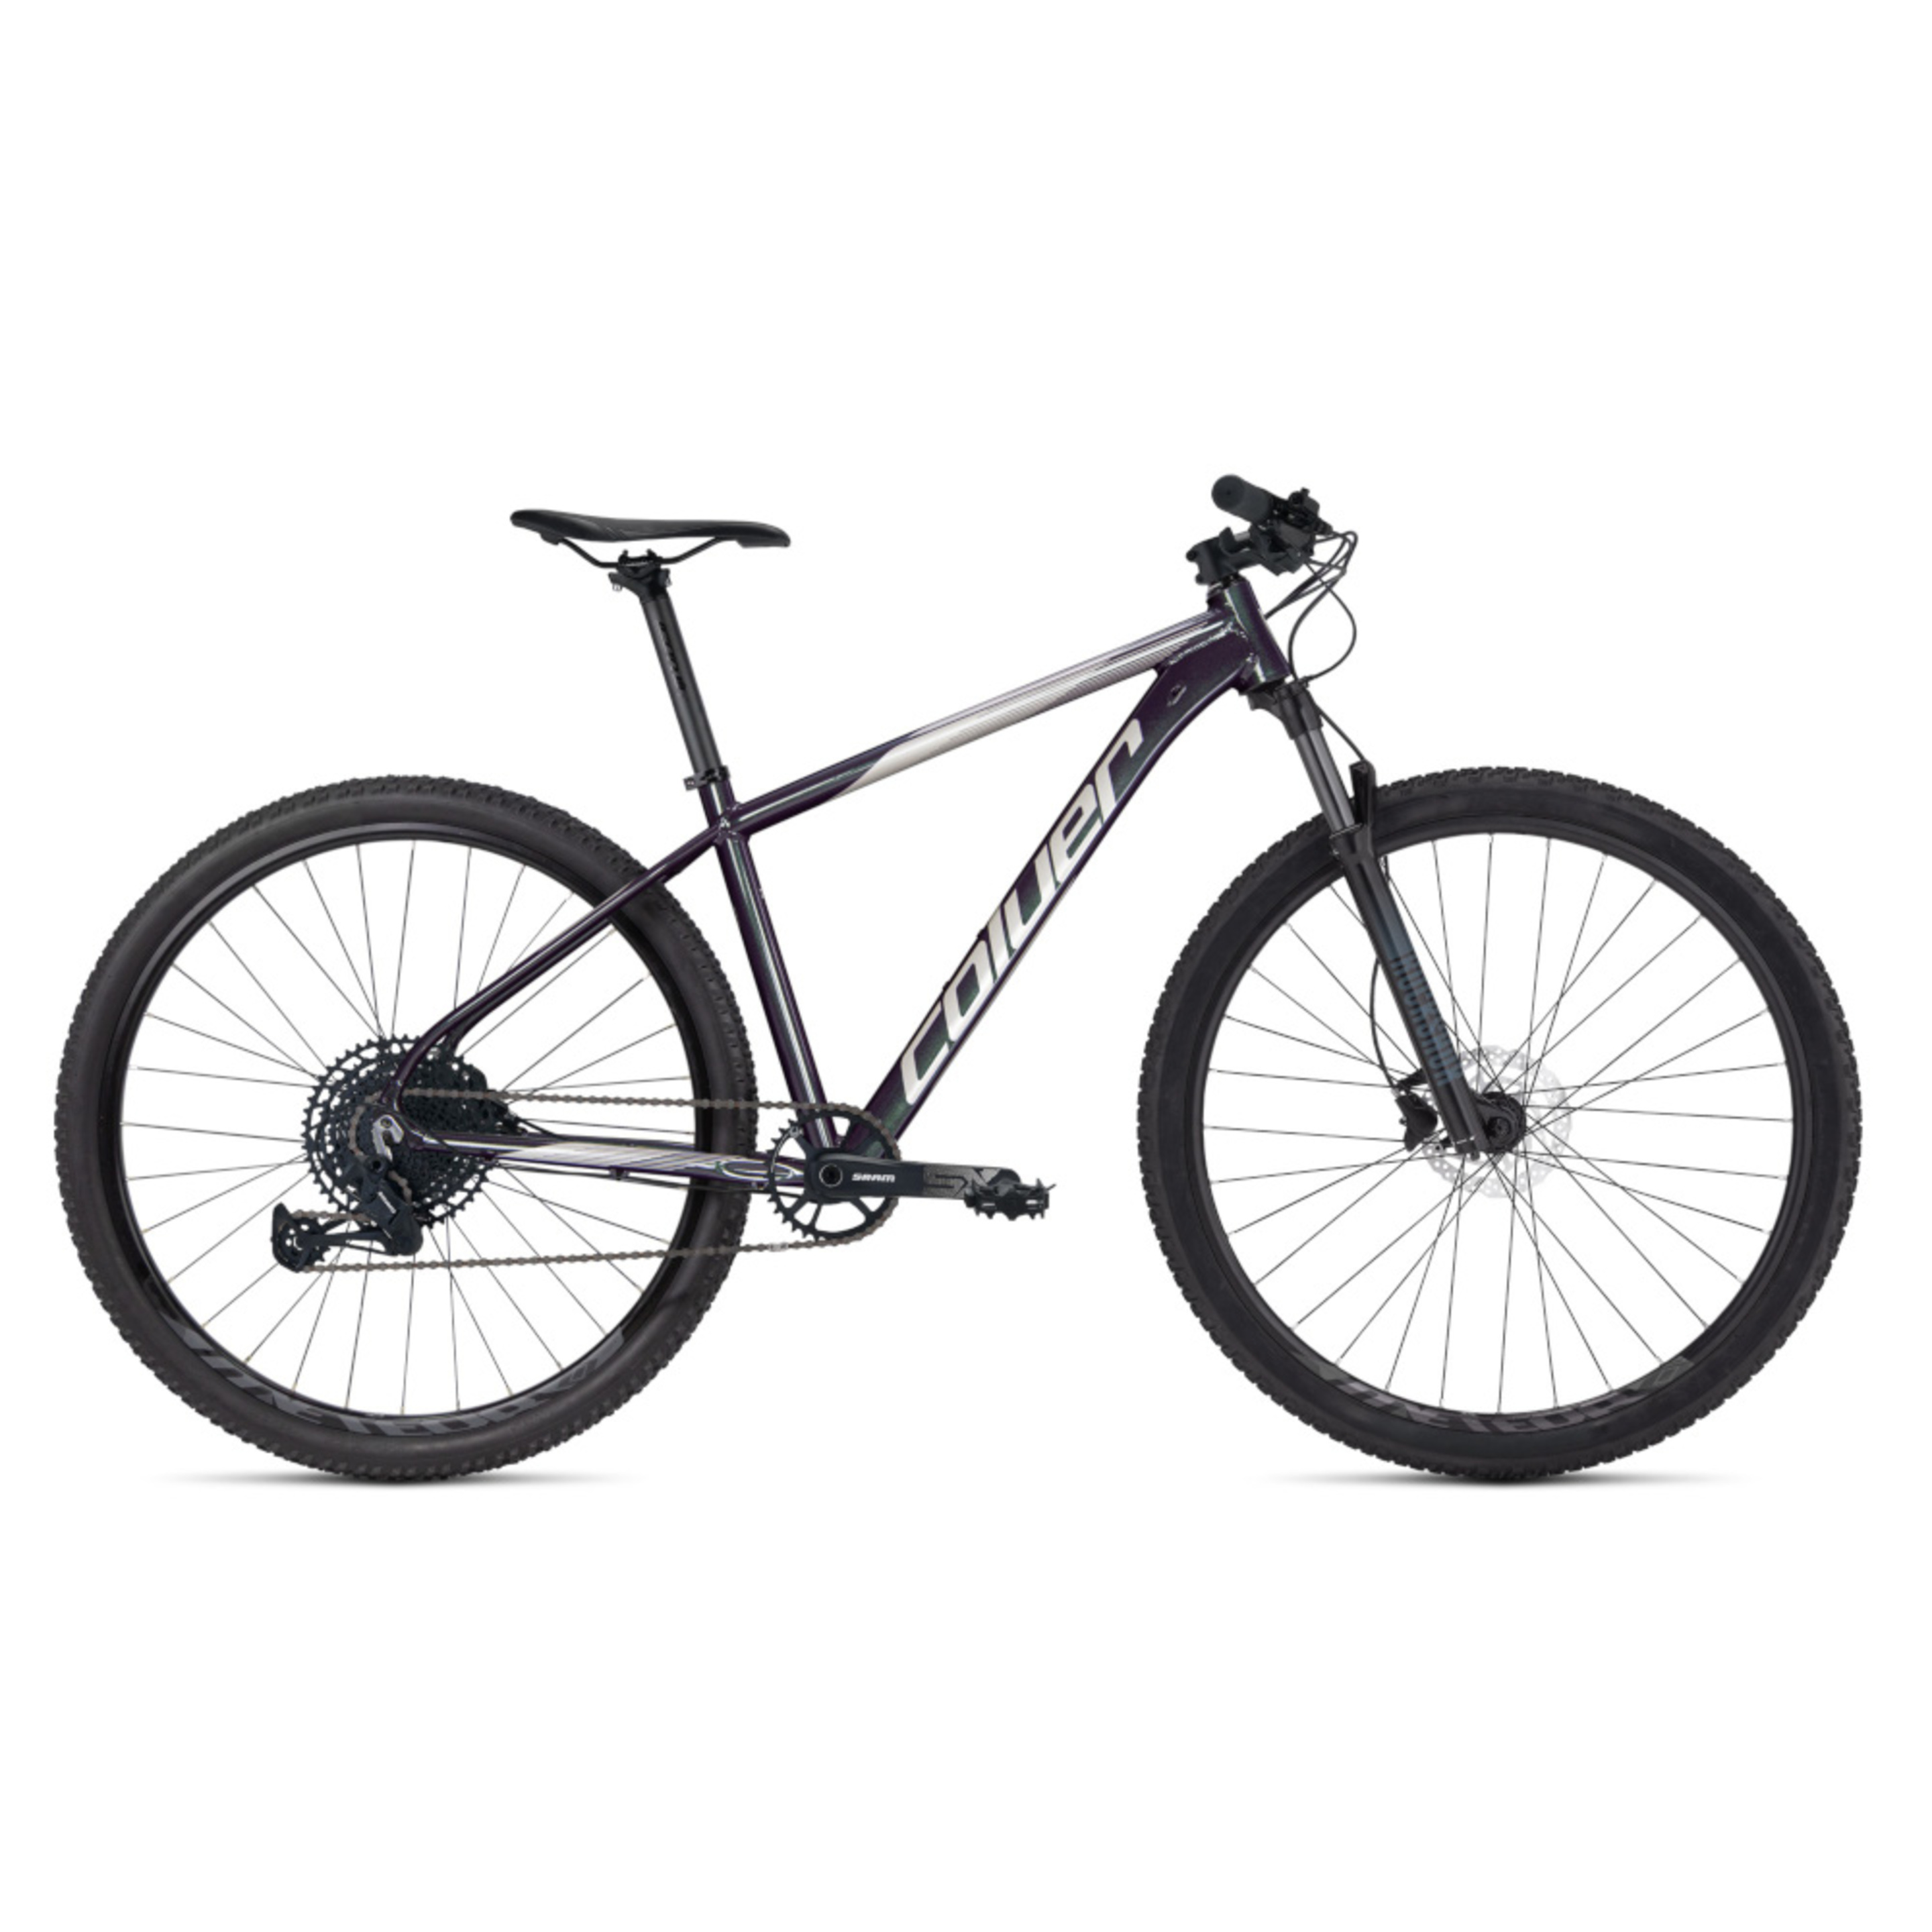 Bicicleta Montaña 29" Coluer Limbo 298 - Púrpura  MKP